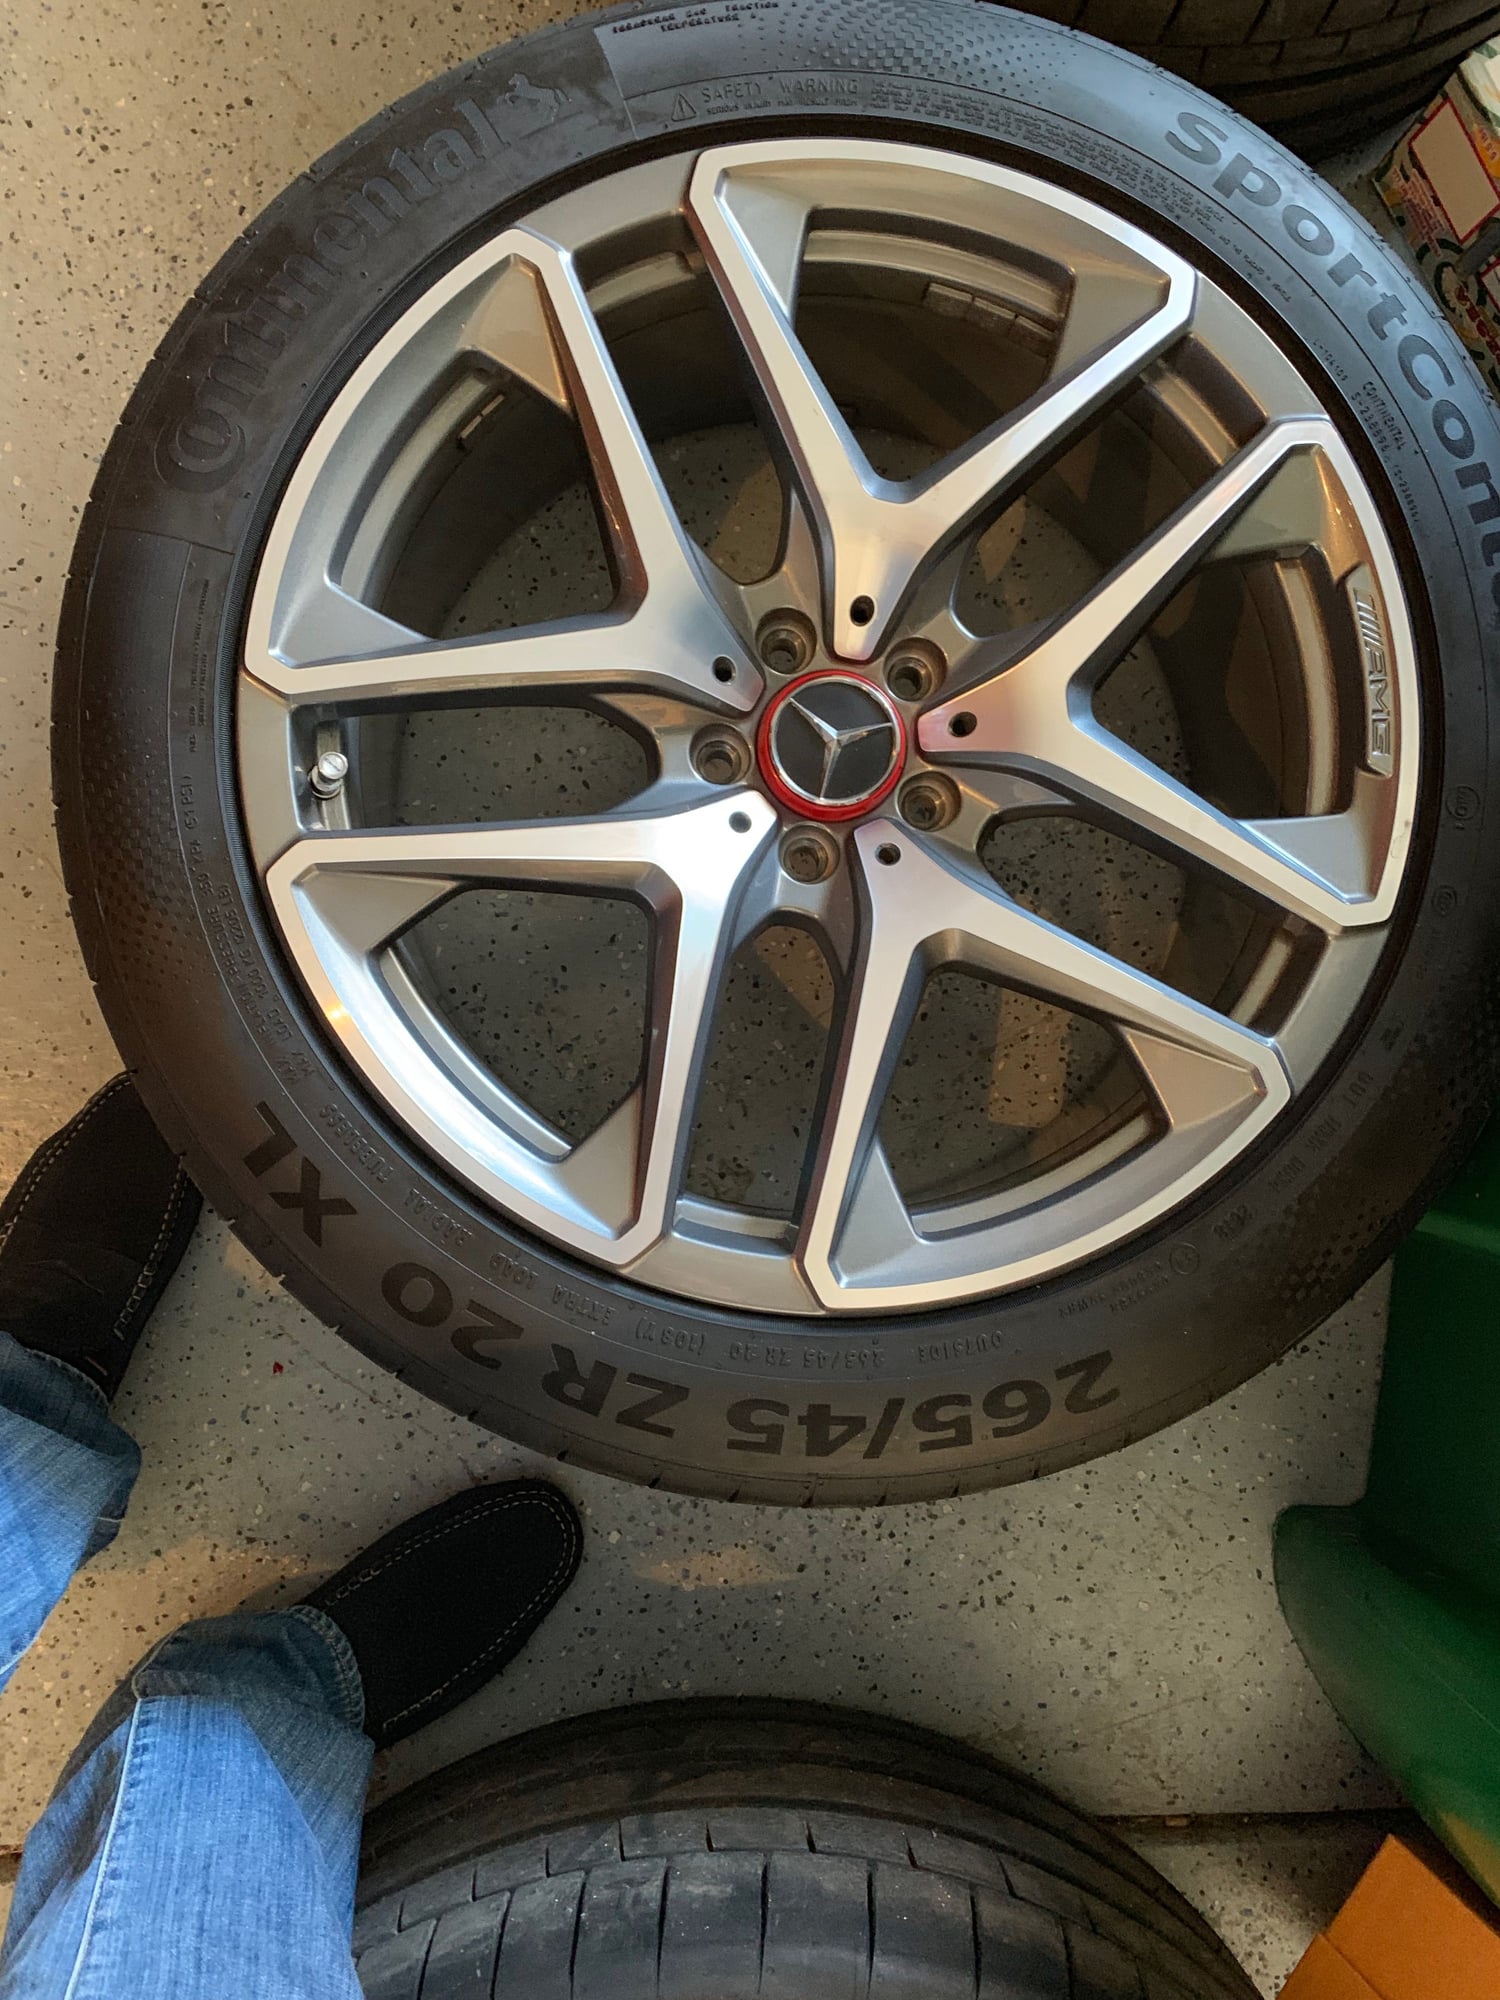 Wheels and Tires/Axles - 2019 GLC63 AMG 20 inch OEM wheels/tires/TPMS - New - 2019 Mercedes-Benz GLC63 AMG - Aurora, CO 80016, United States